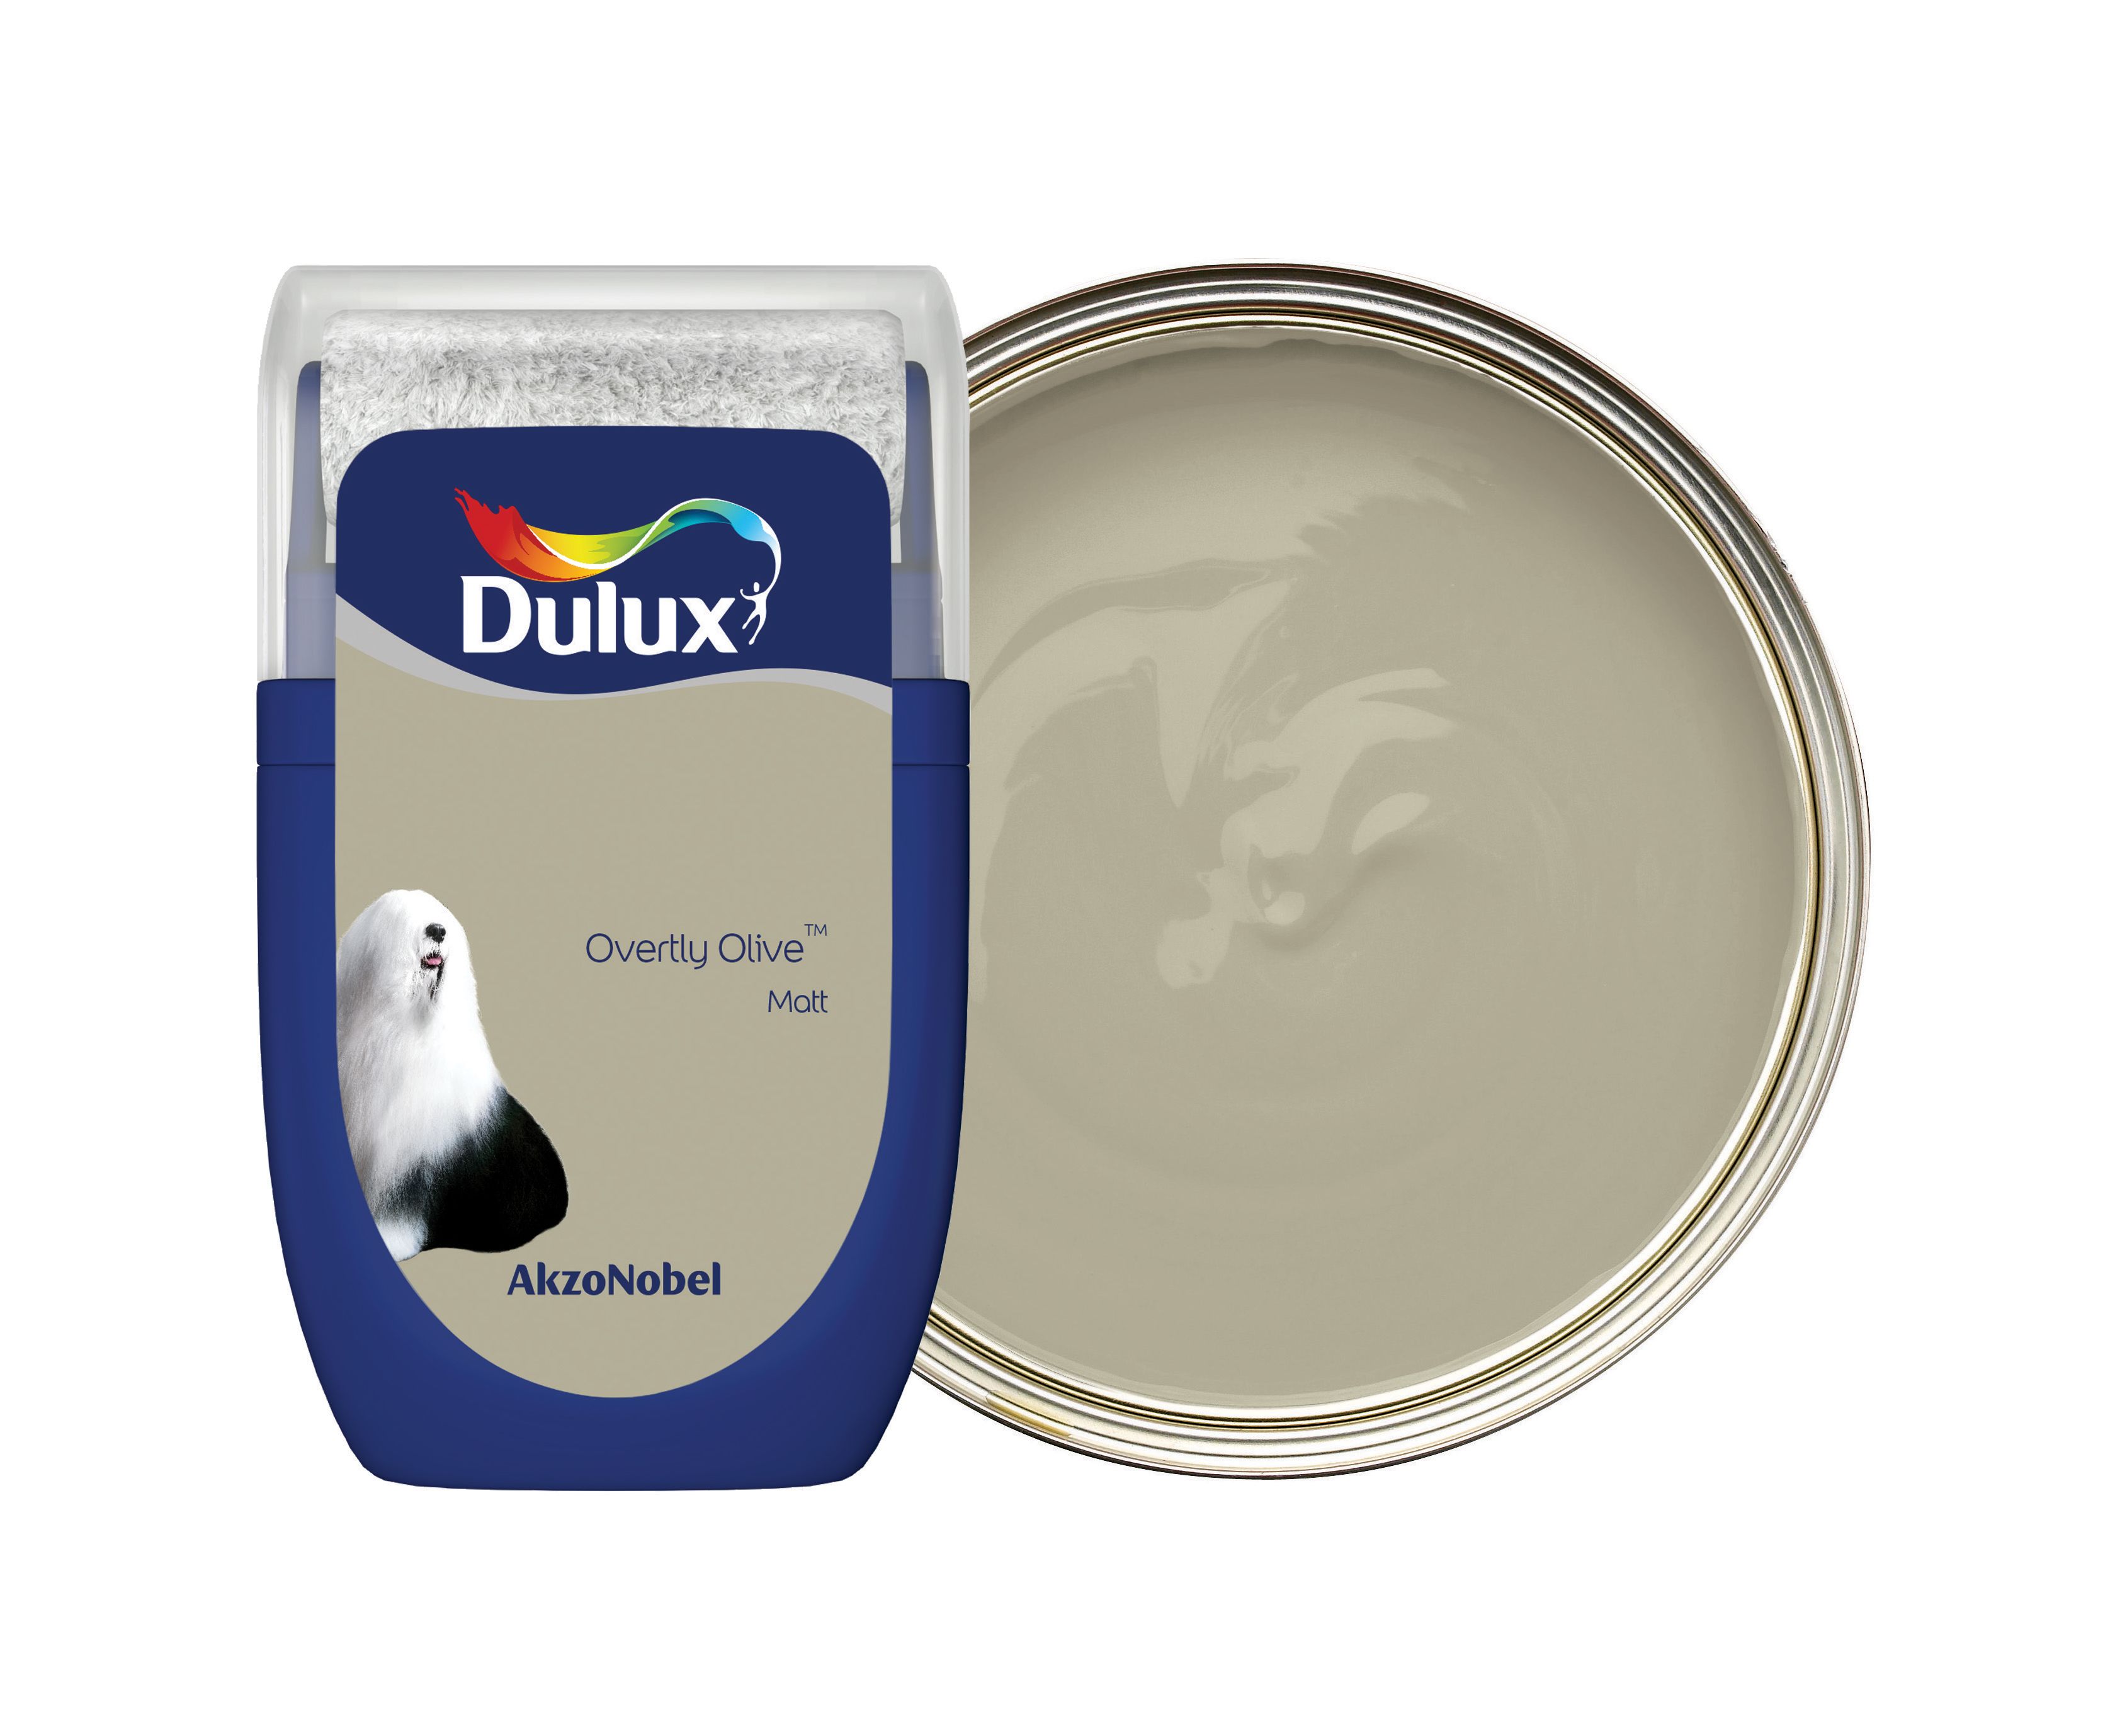 Dulux Emulsion Paint Tester Pot - Overtly Olive - 30ml